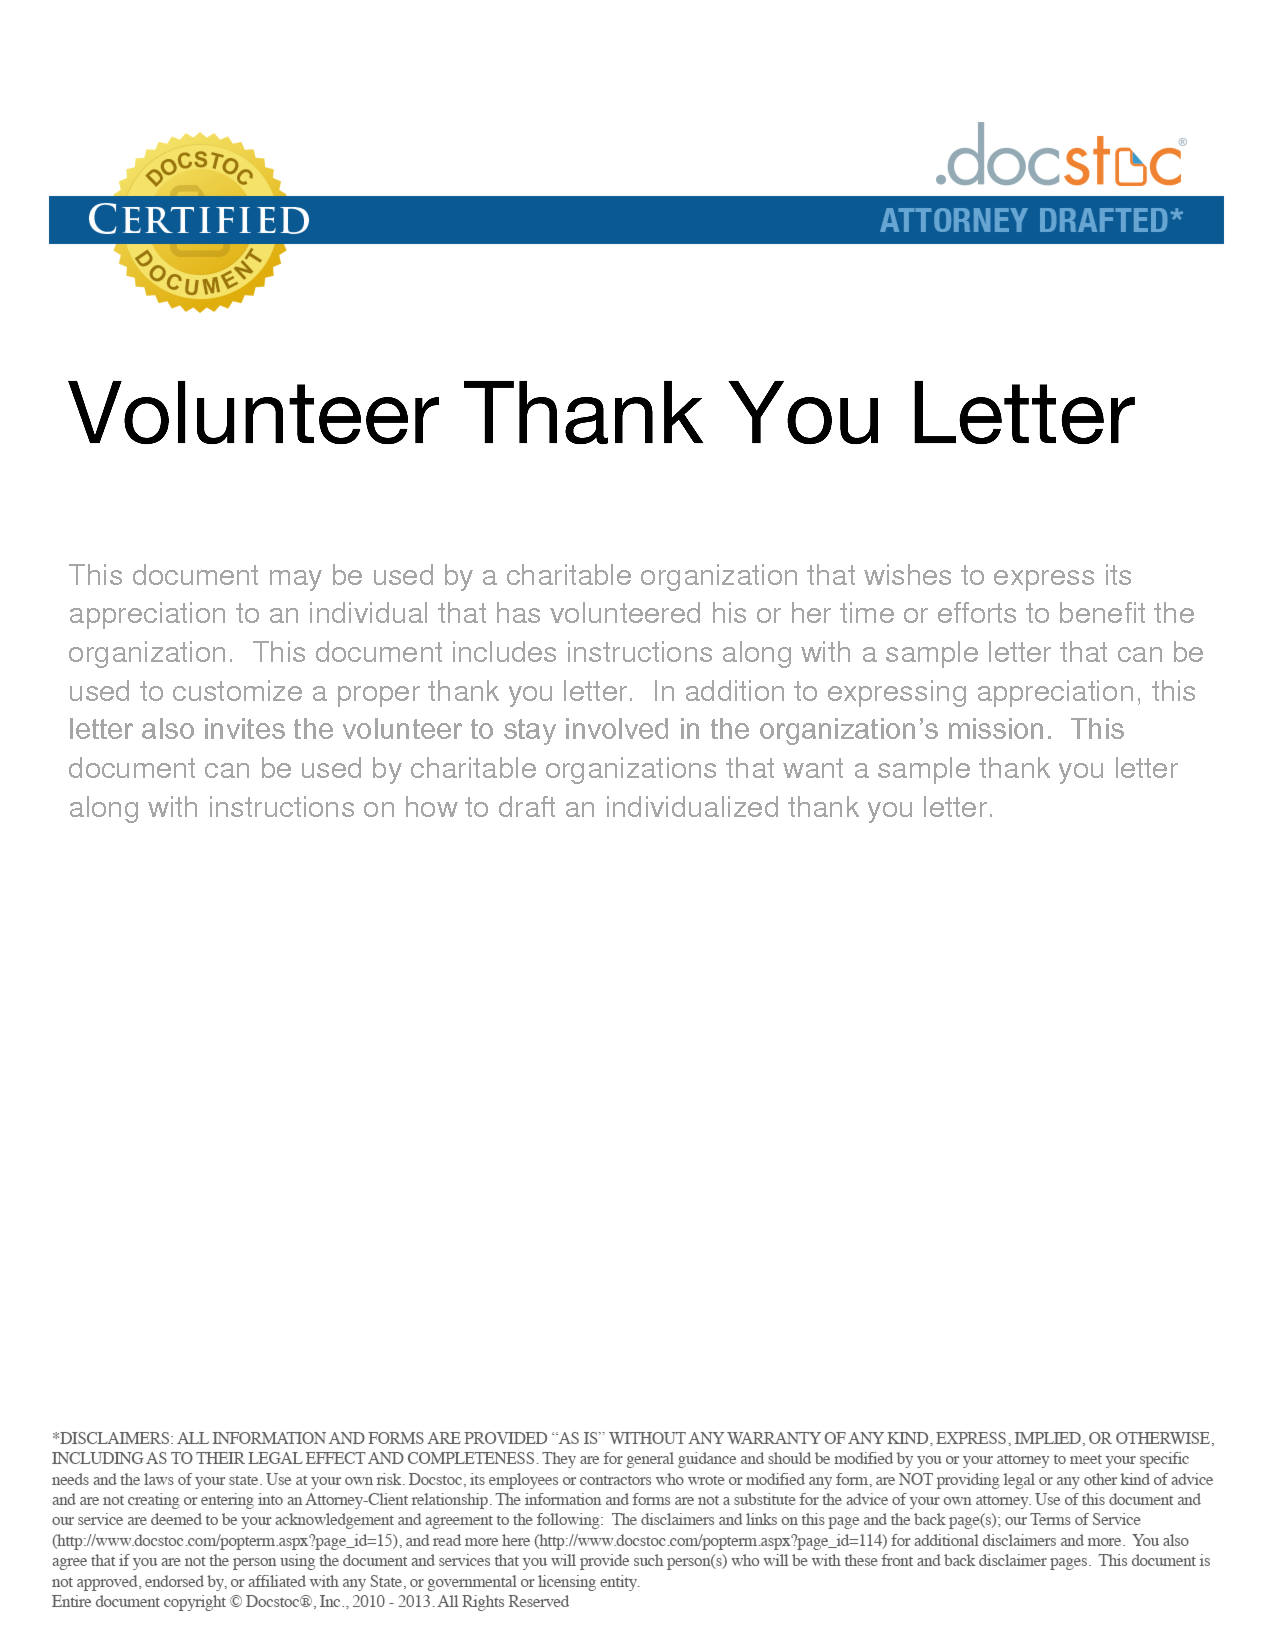 Volunteer appreciation letter sample Rich image and wallpaper